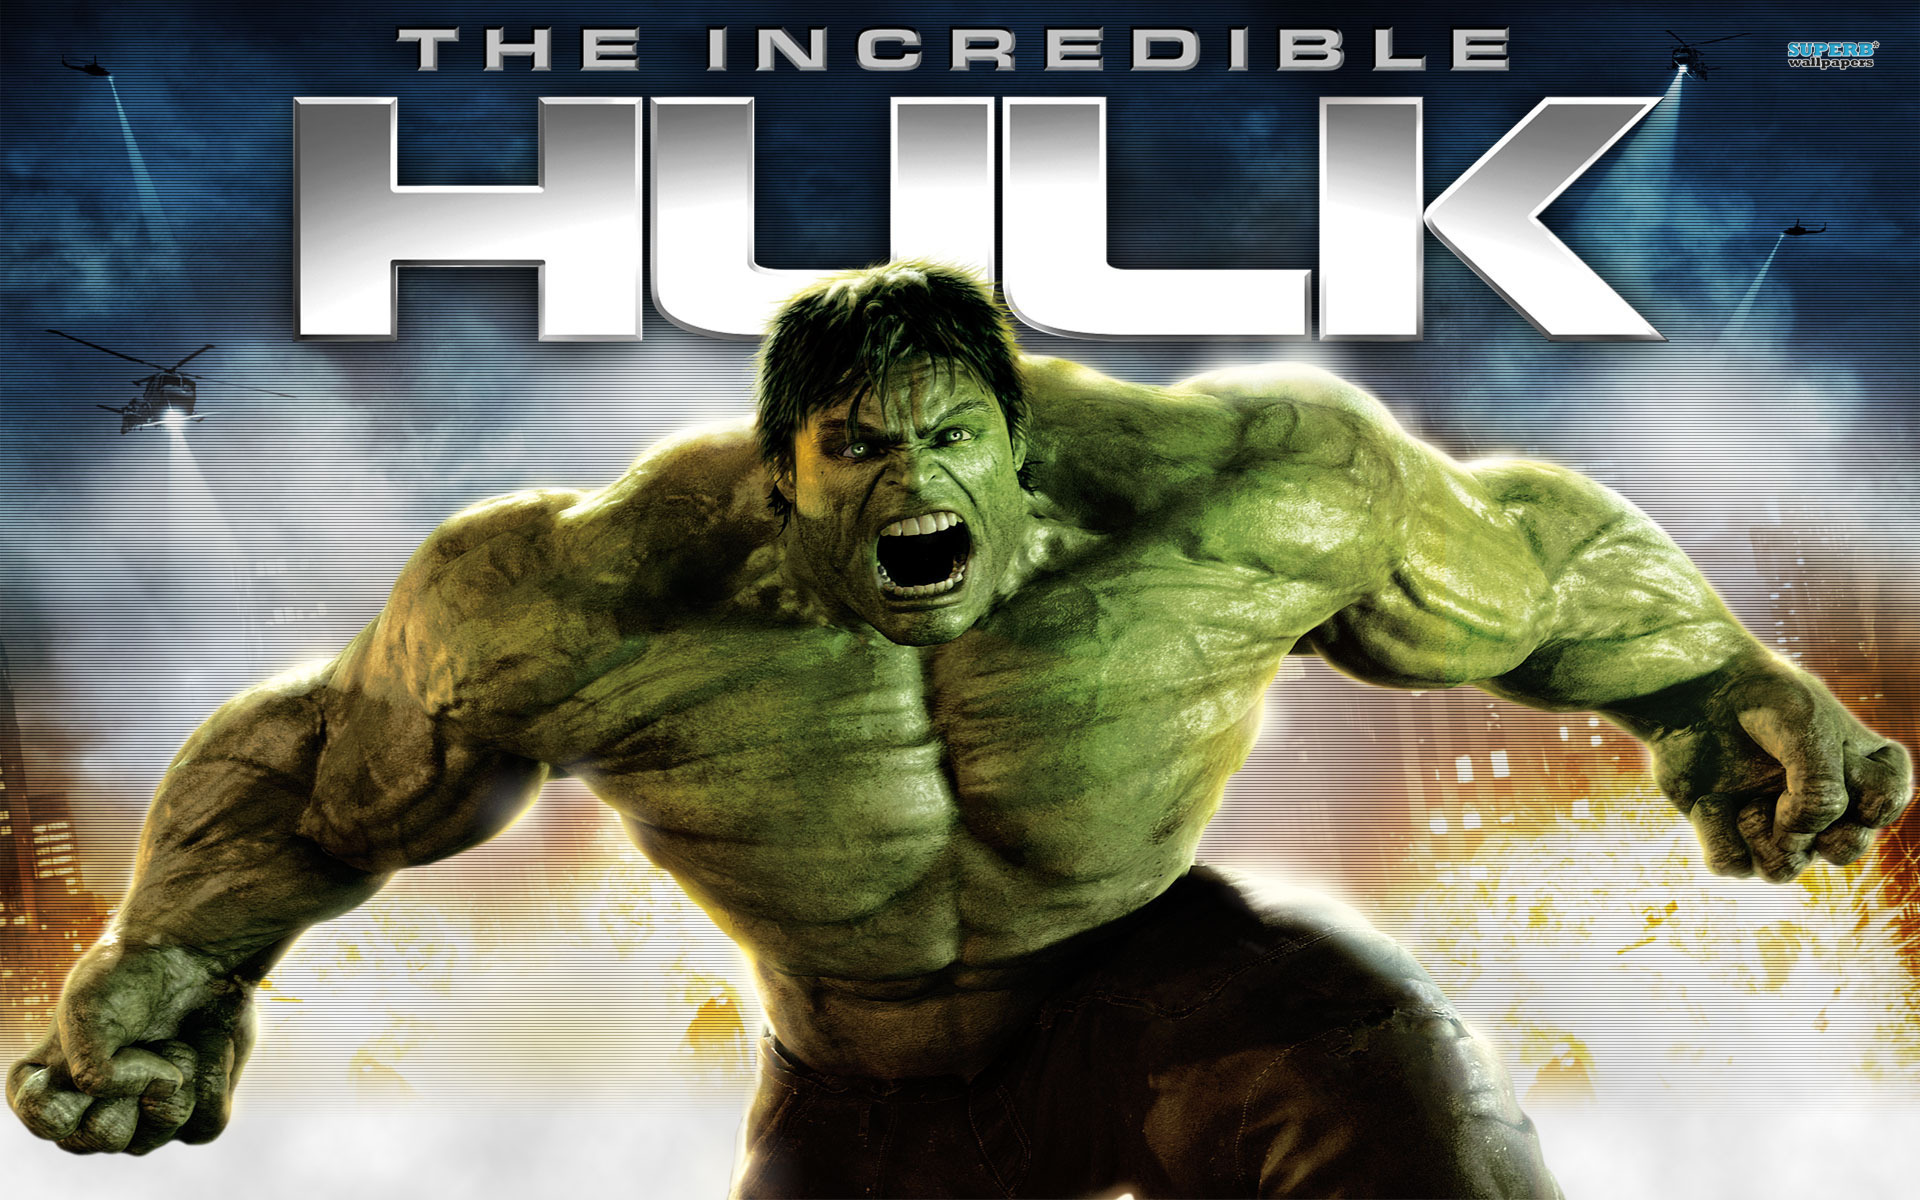 High Resolution Wallpaper | The Incredible Hulk 1920x1200 px